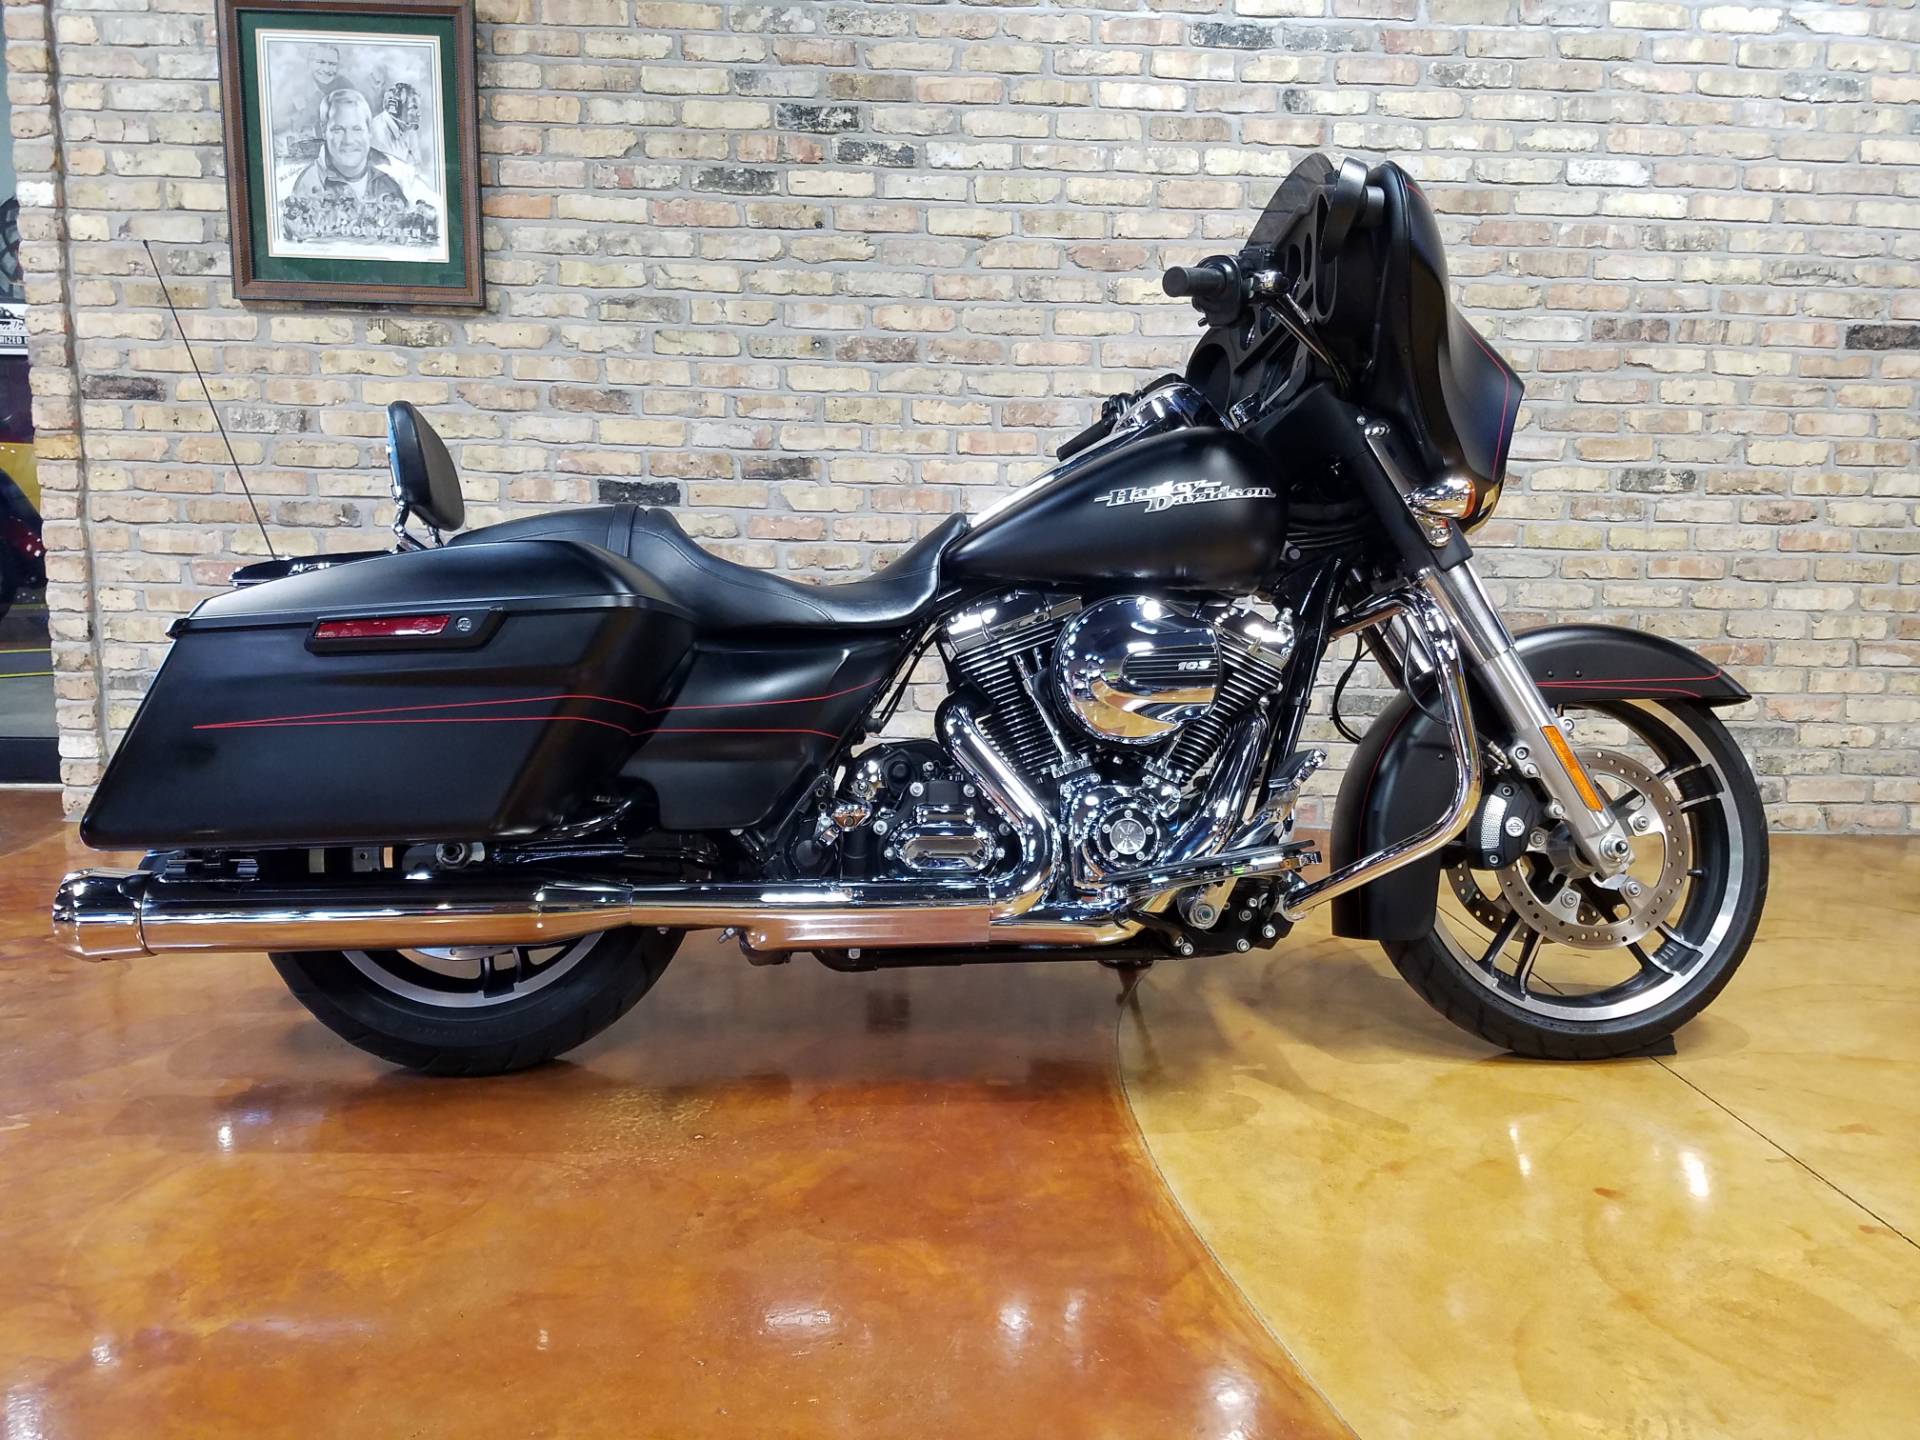 Used 2015 Harley Davidson Street Glide Special Motorcycles In Big Bend Wi 4333 Black Demin